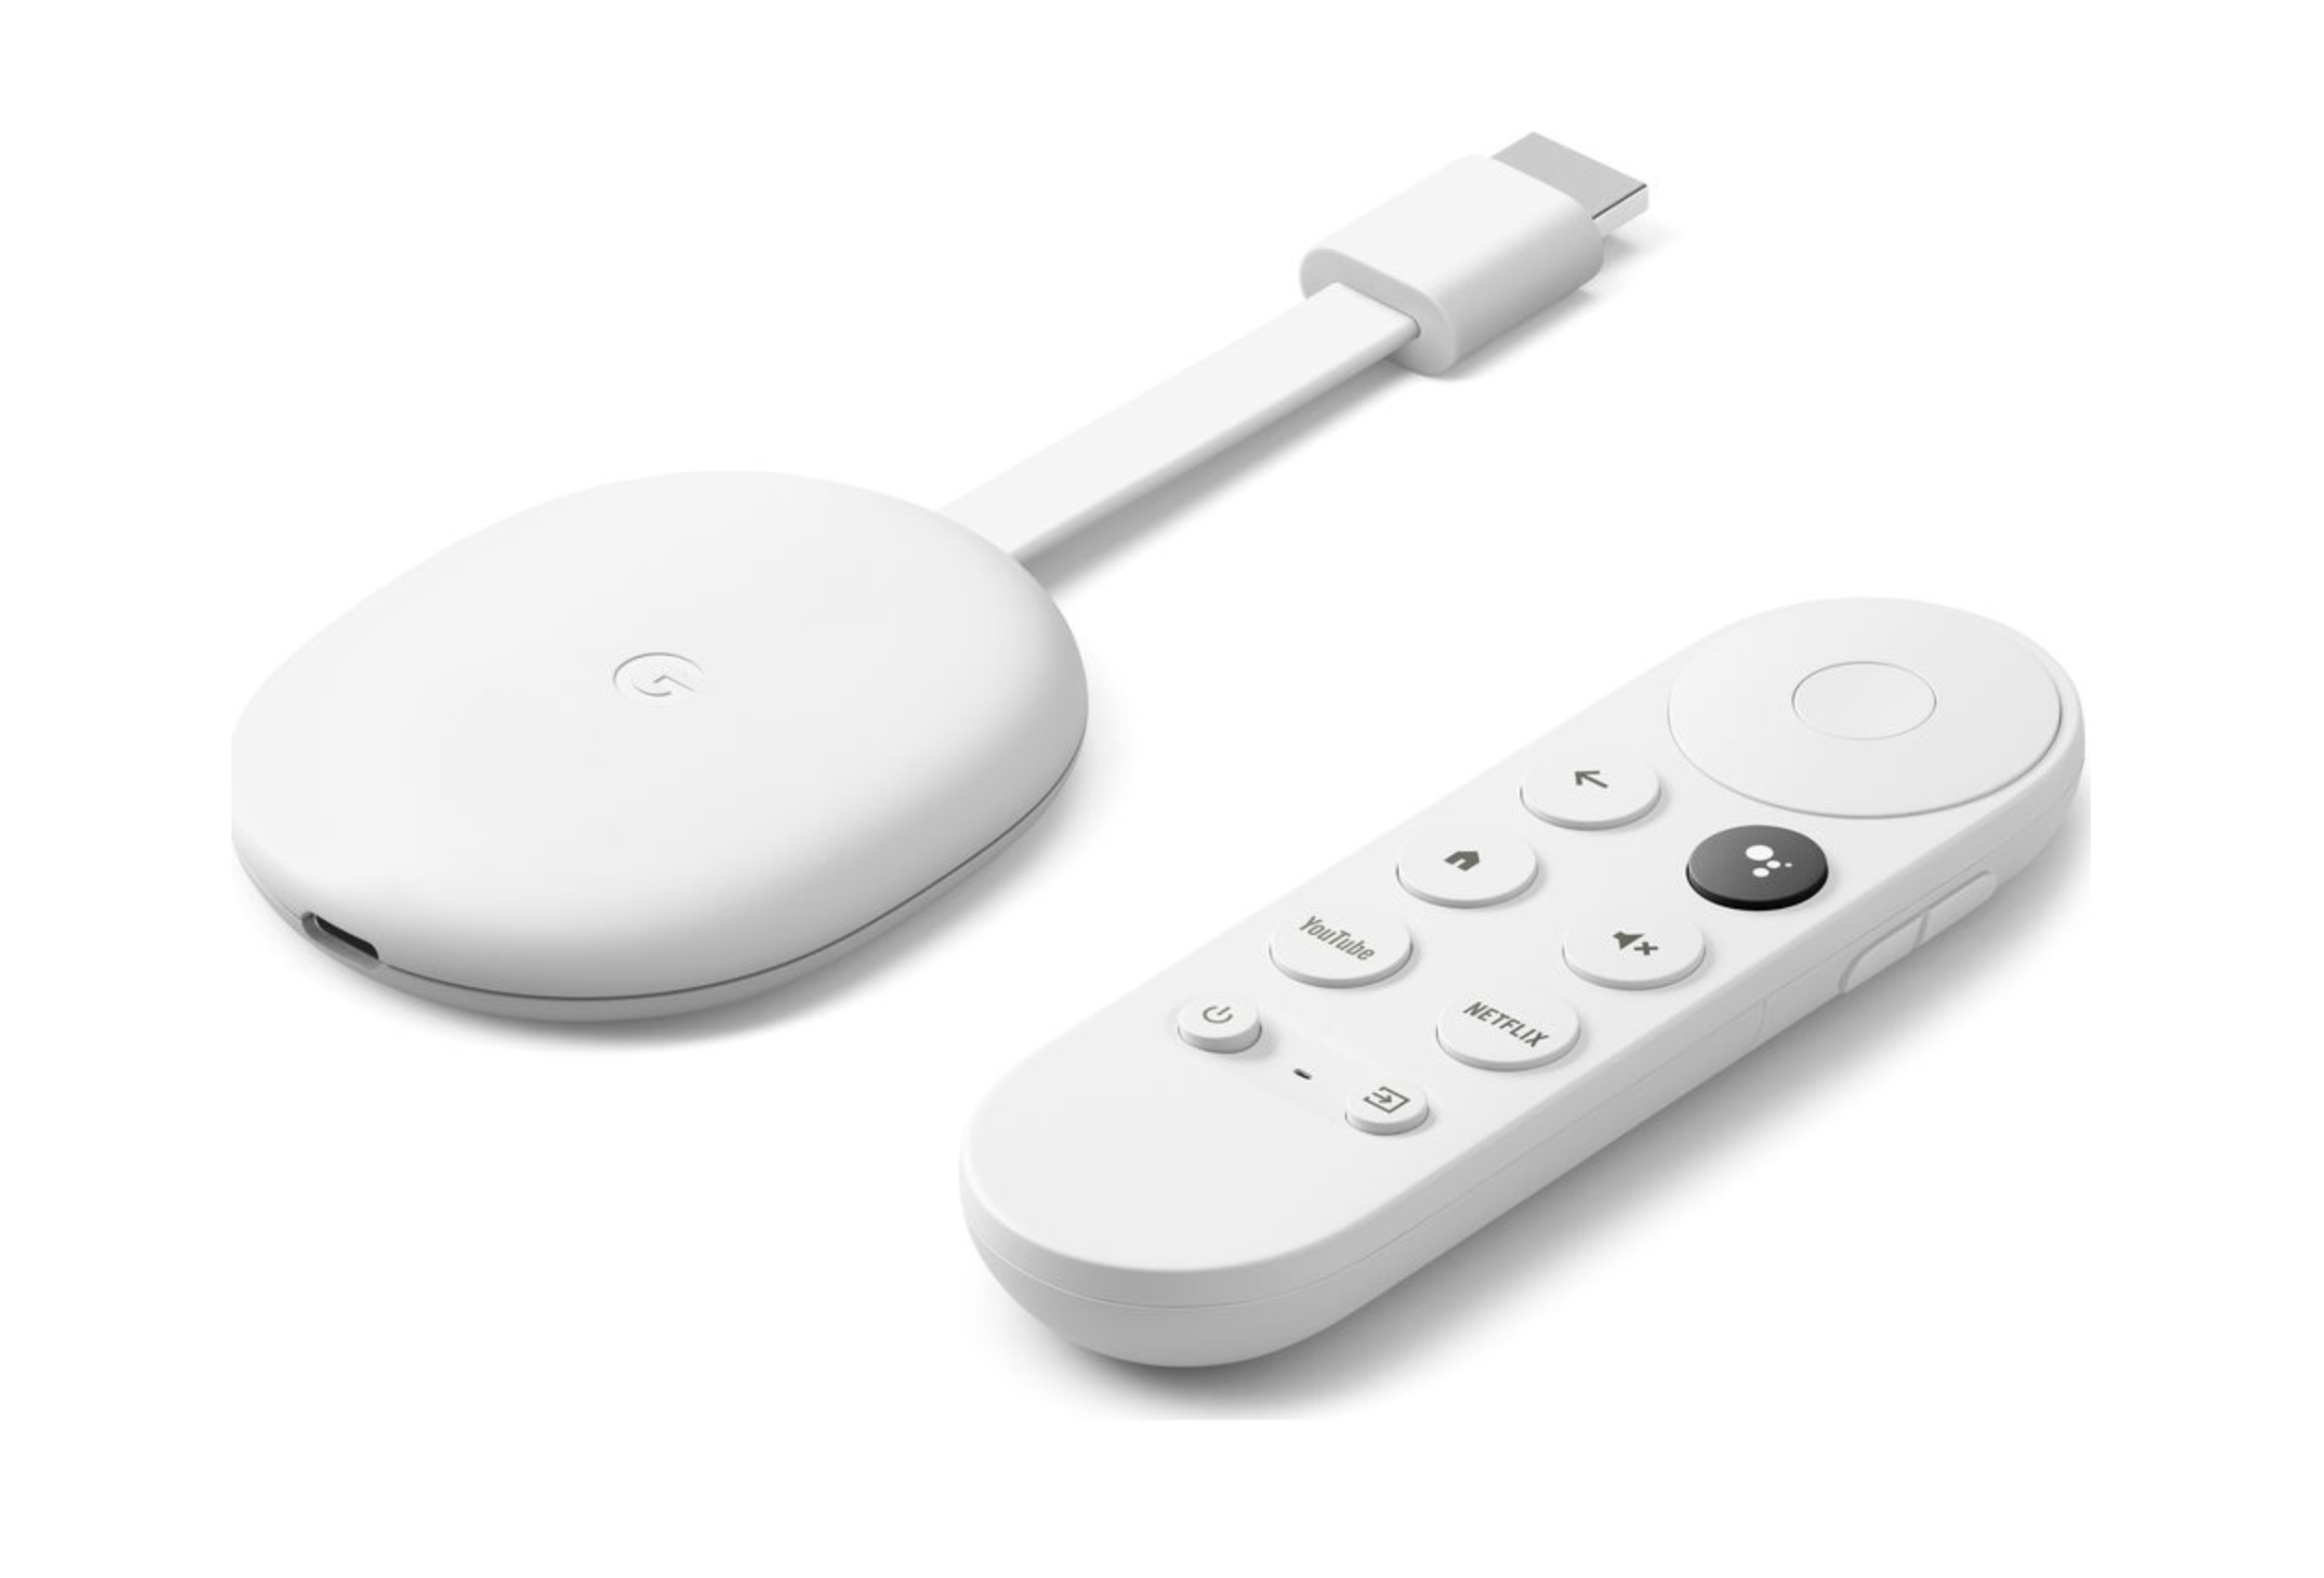 The 2020 Google Chromecast with Google TV